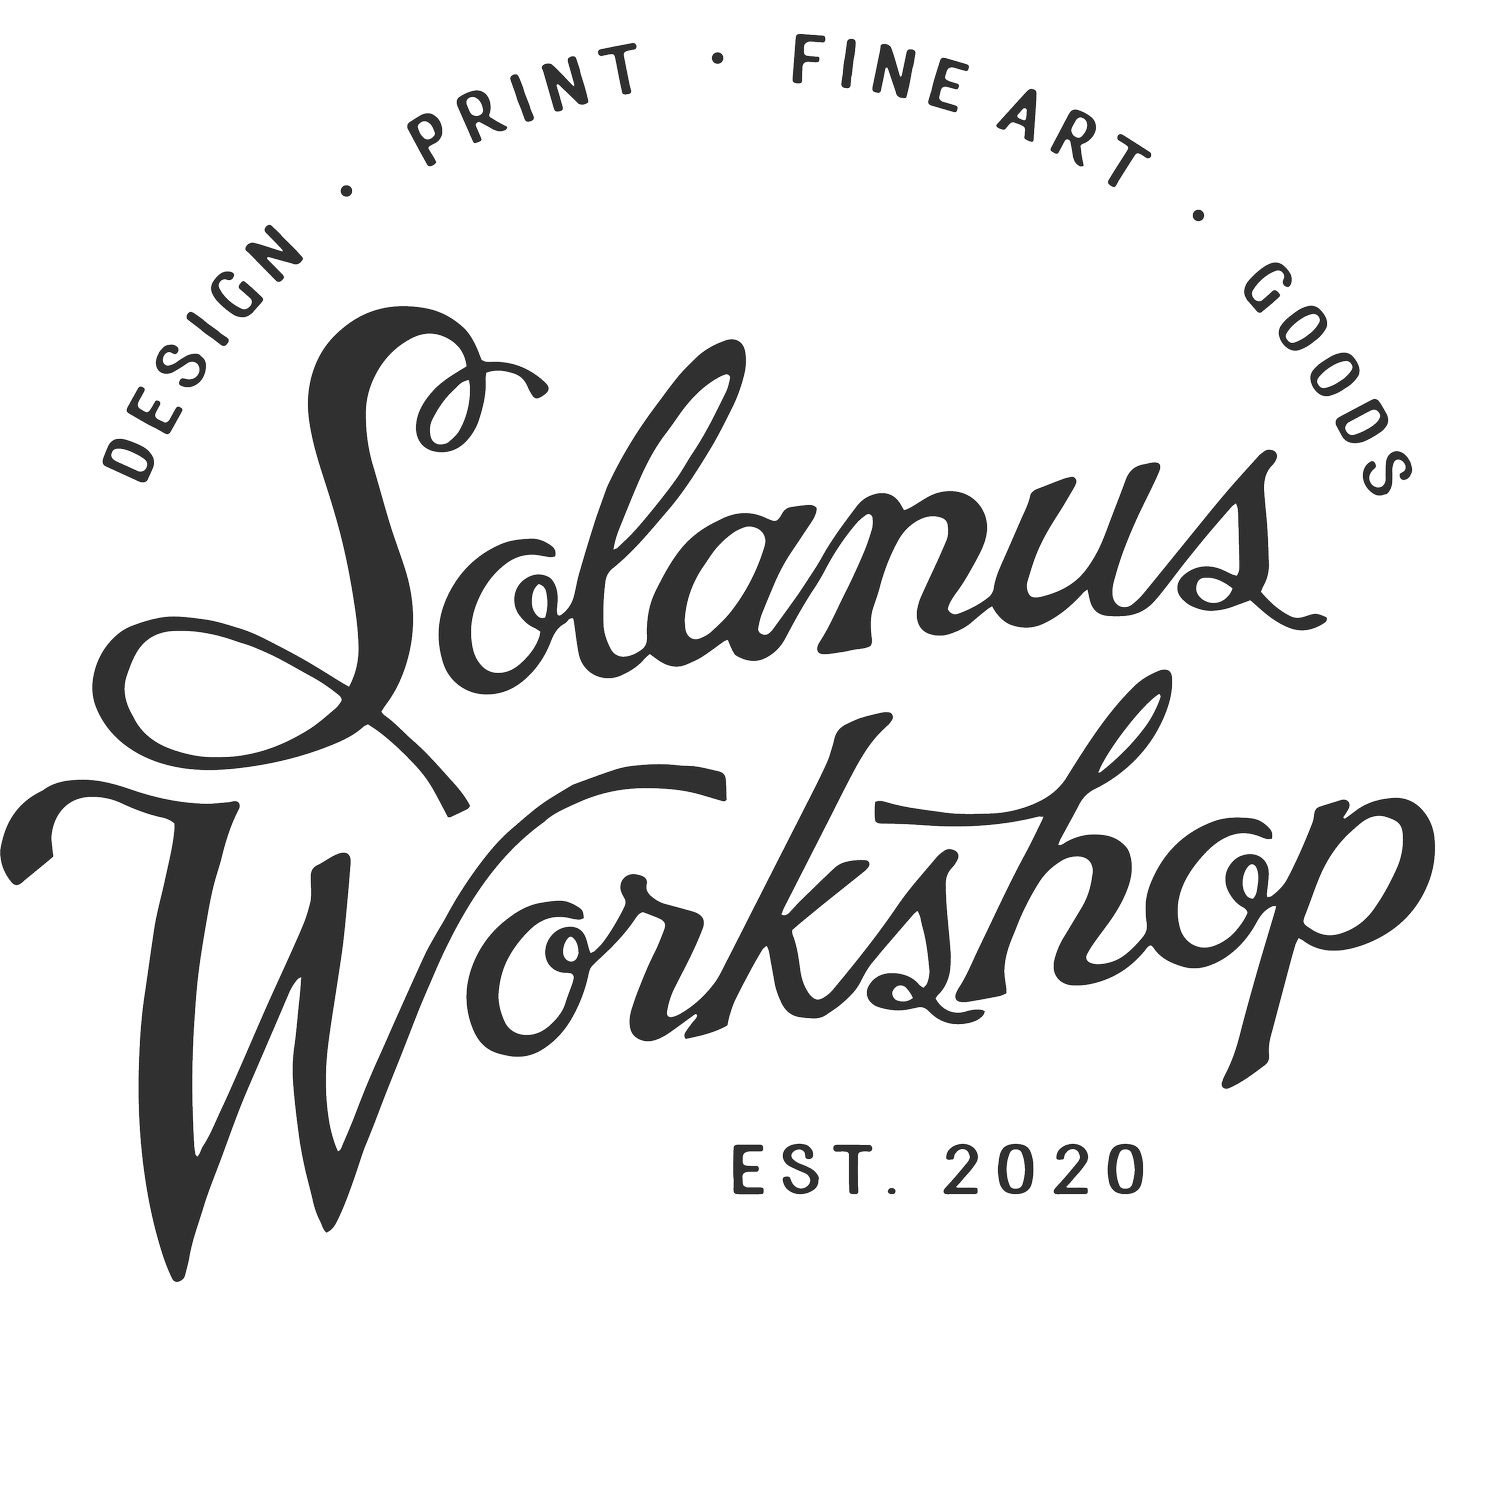 Solanus Workshop